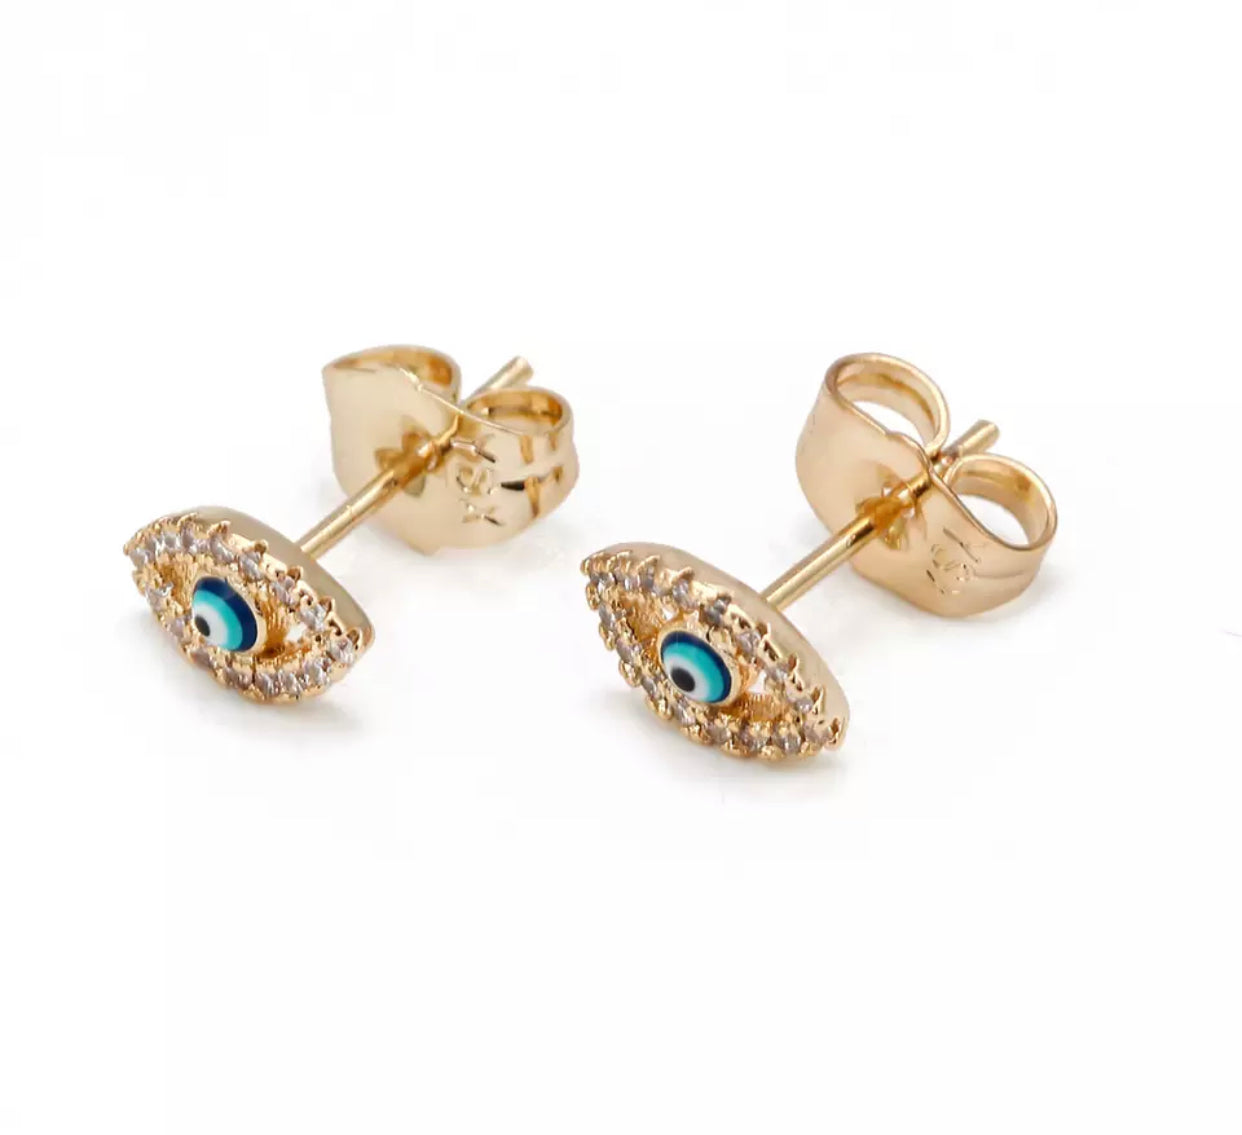 Tiny Evil Eye Turkey Stud Earrings - Classics Jewelry Gifts